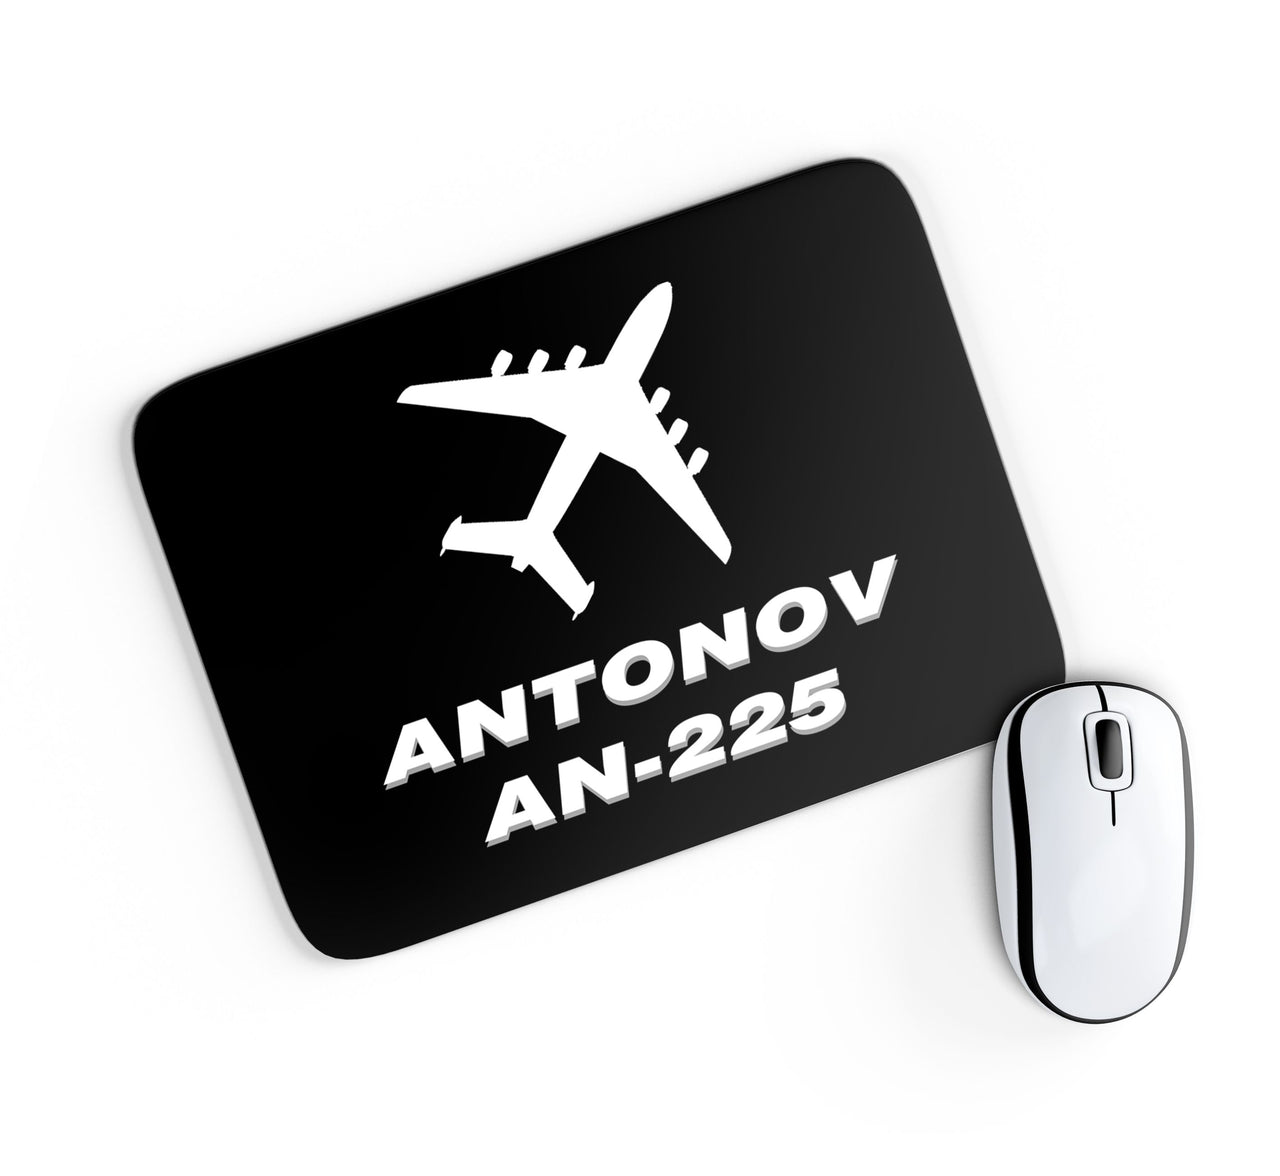 Antonov AN-225 (28) Designed Mouse Pads